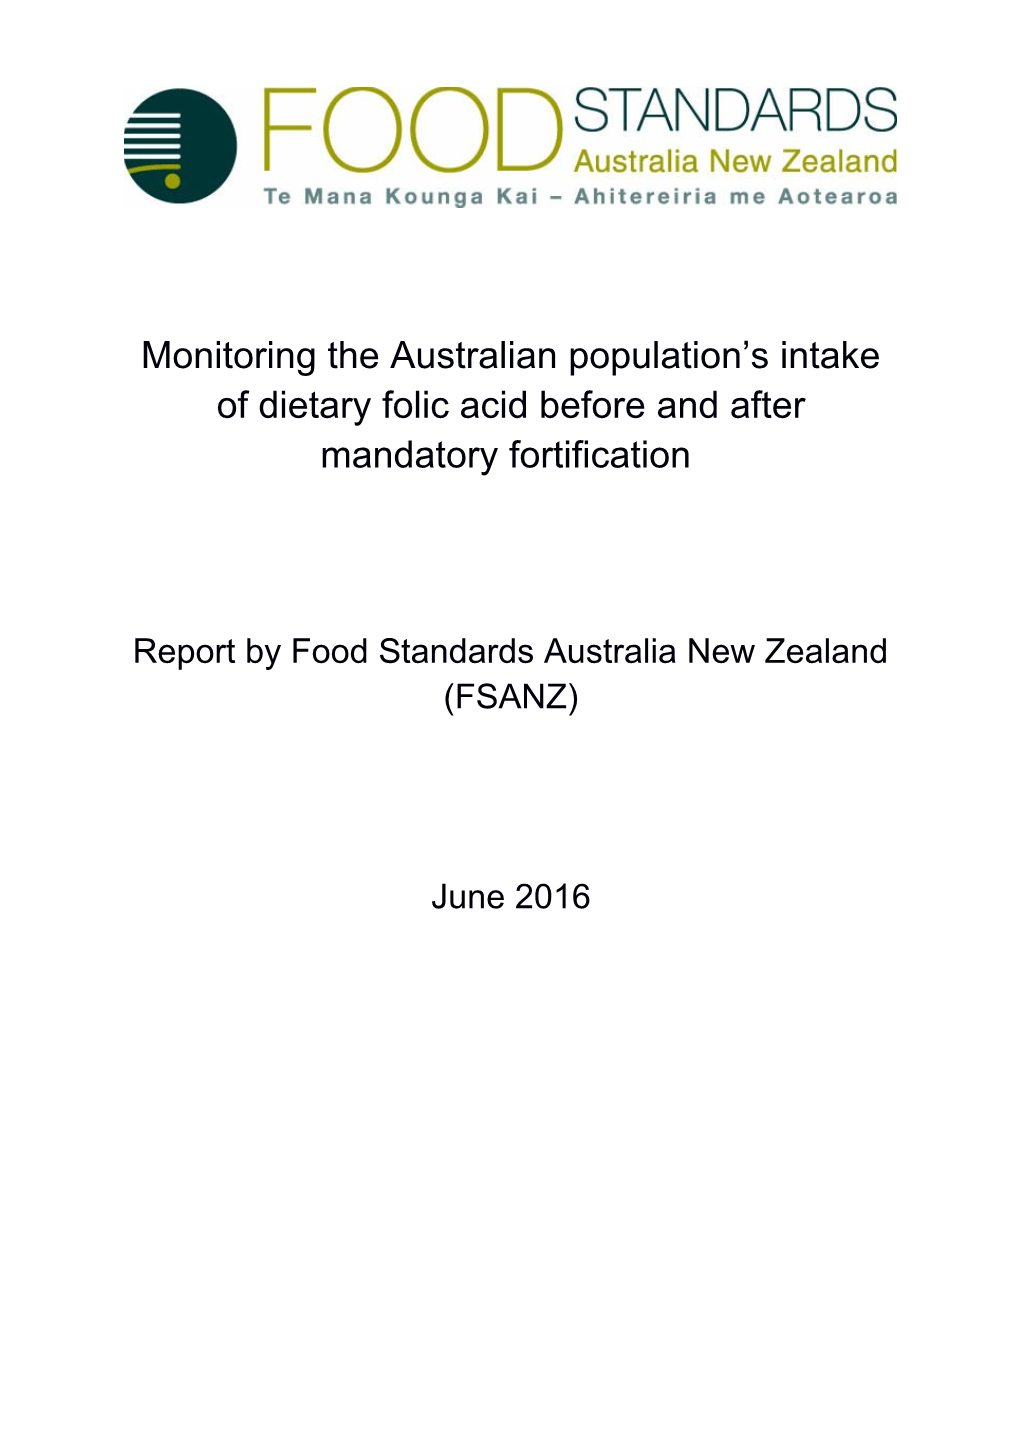 Report by Food Standards Australia New Zealand (FSANZ)